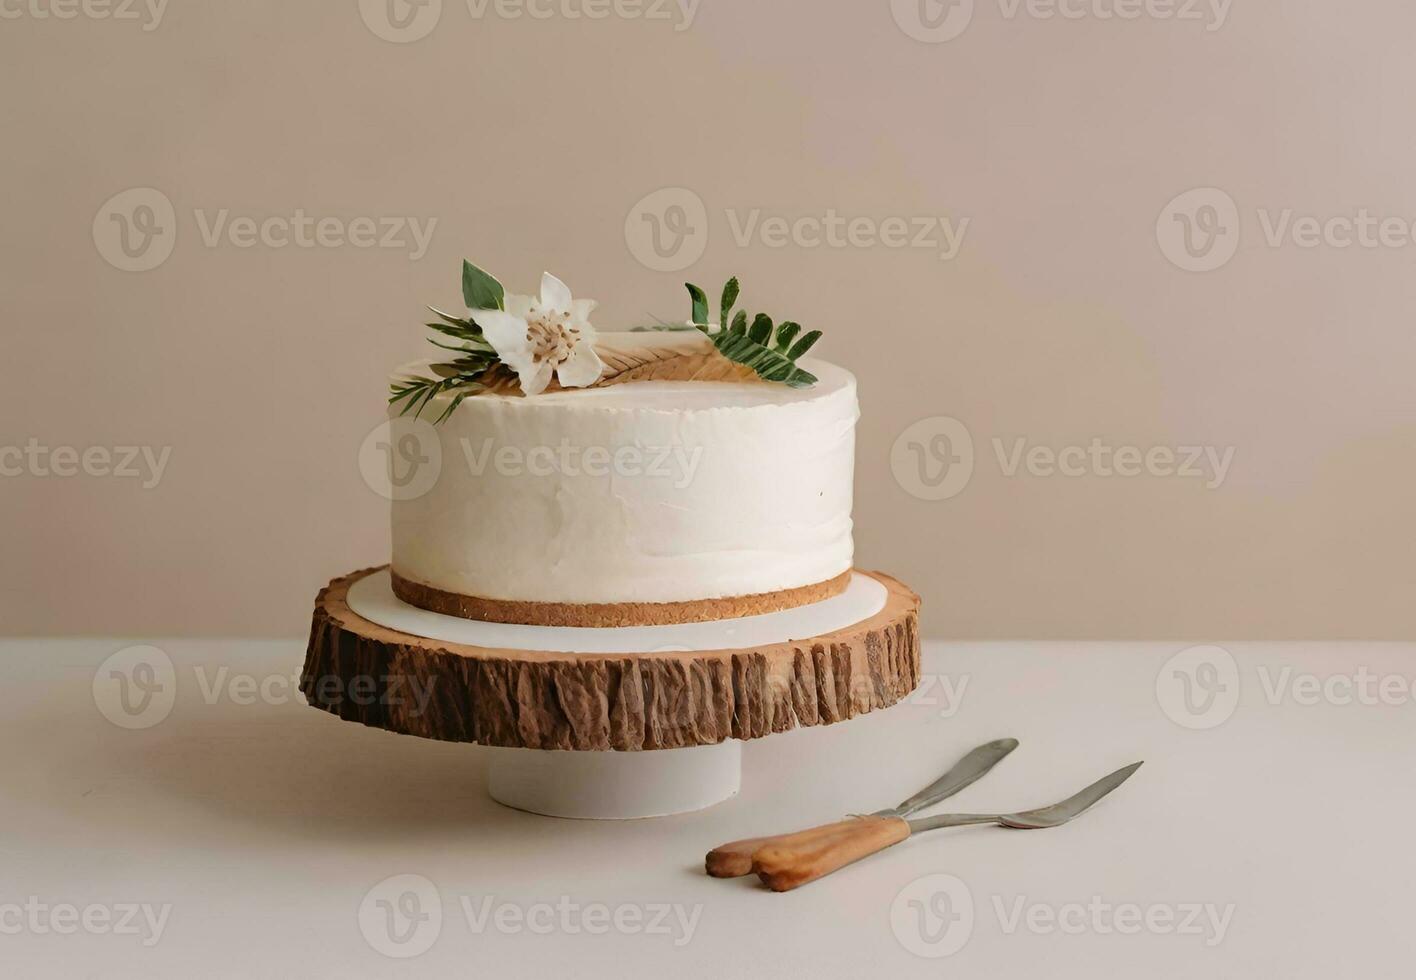 cake nature decoration inspiration for business cake shop photo